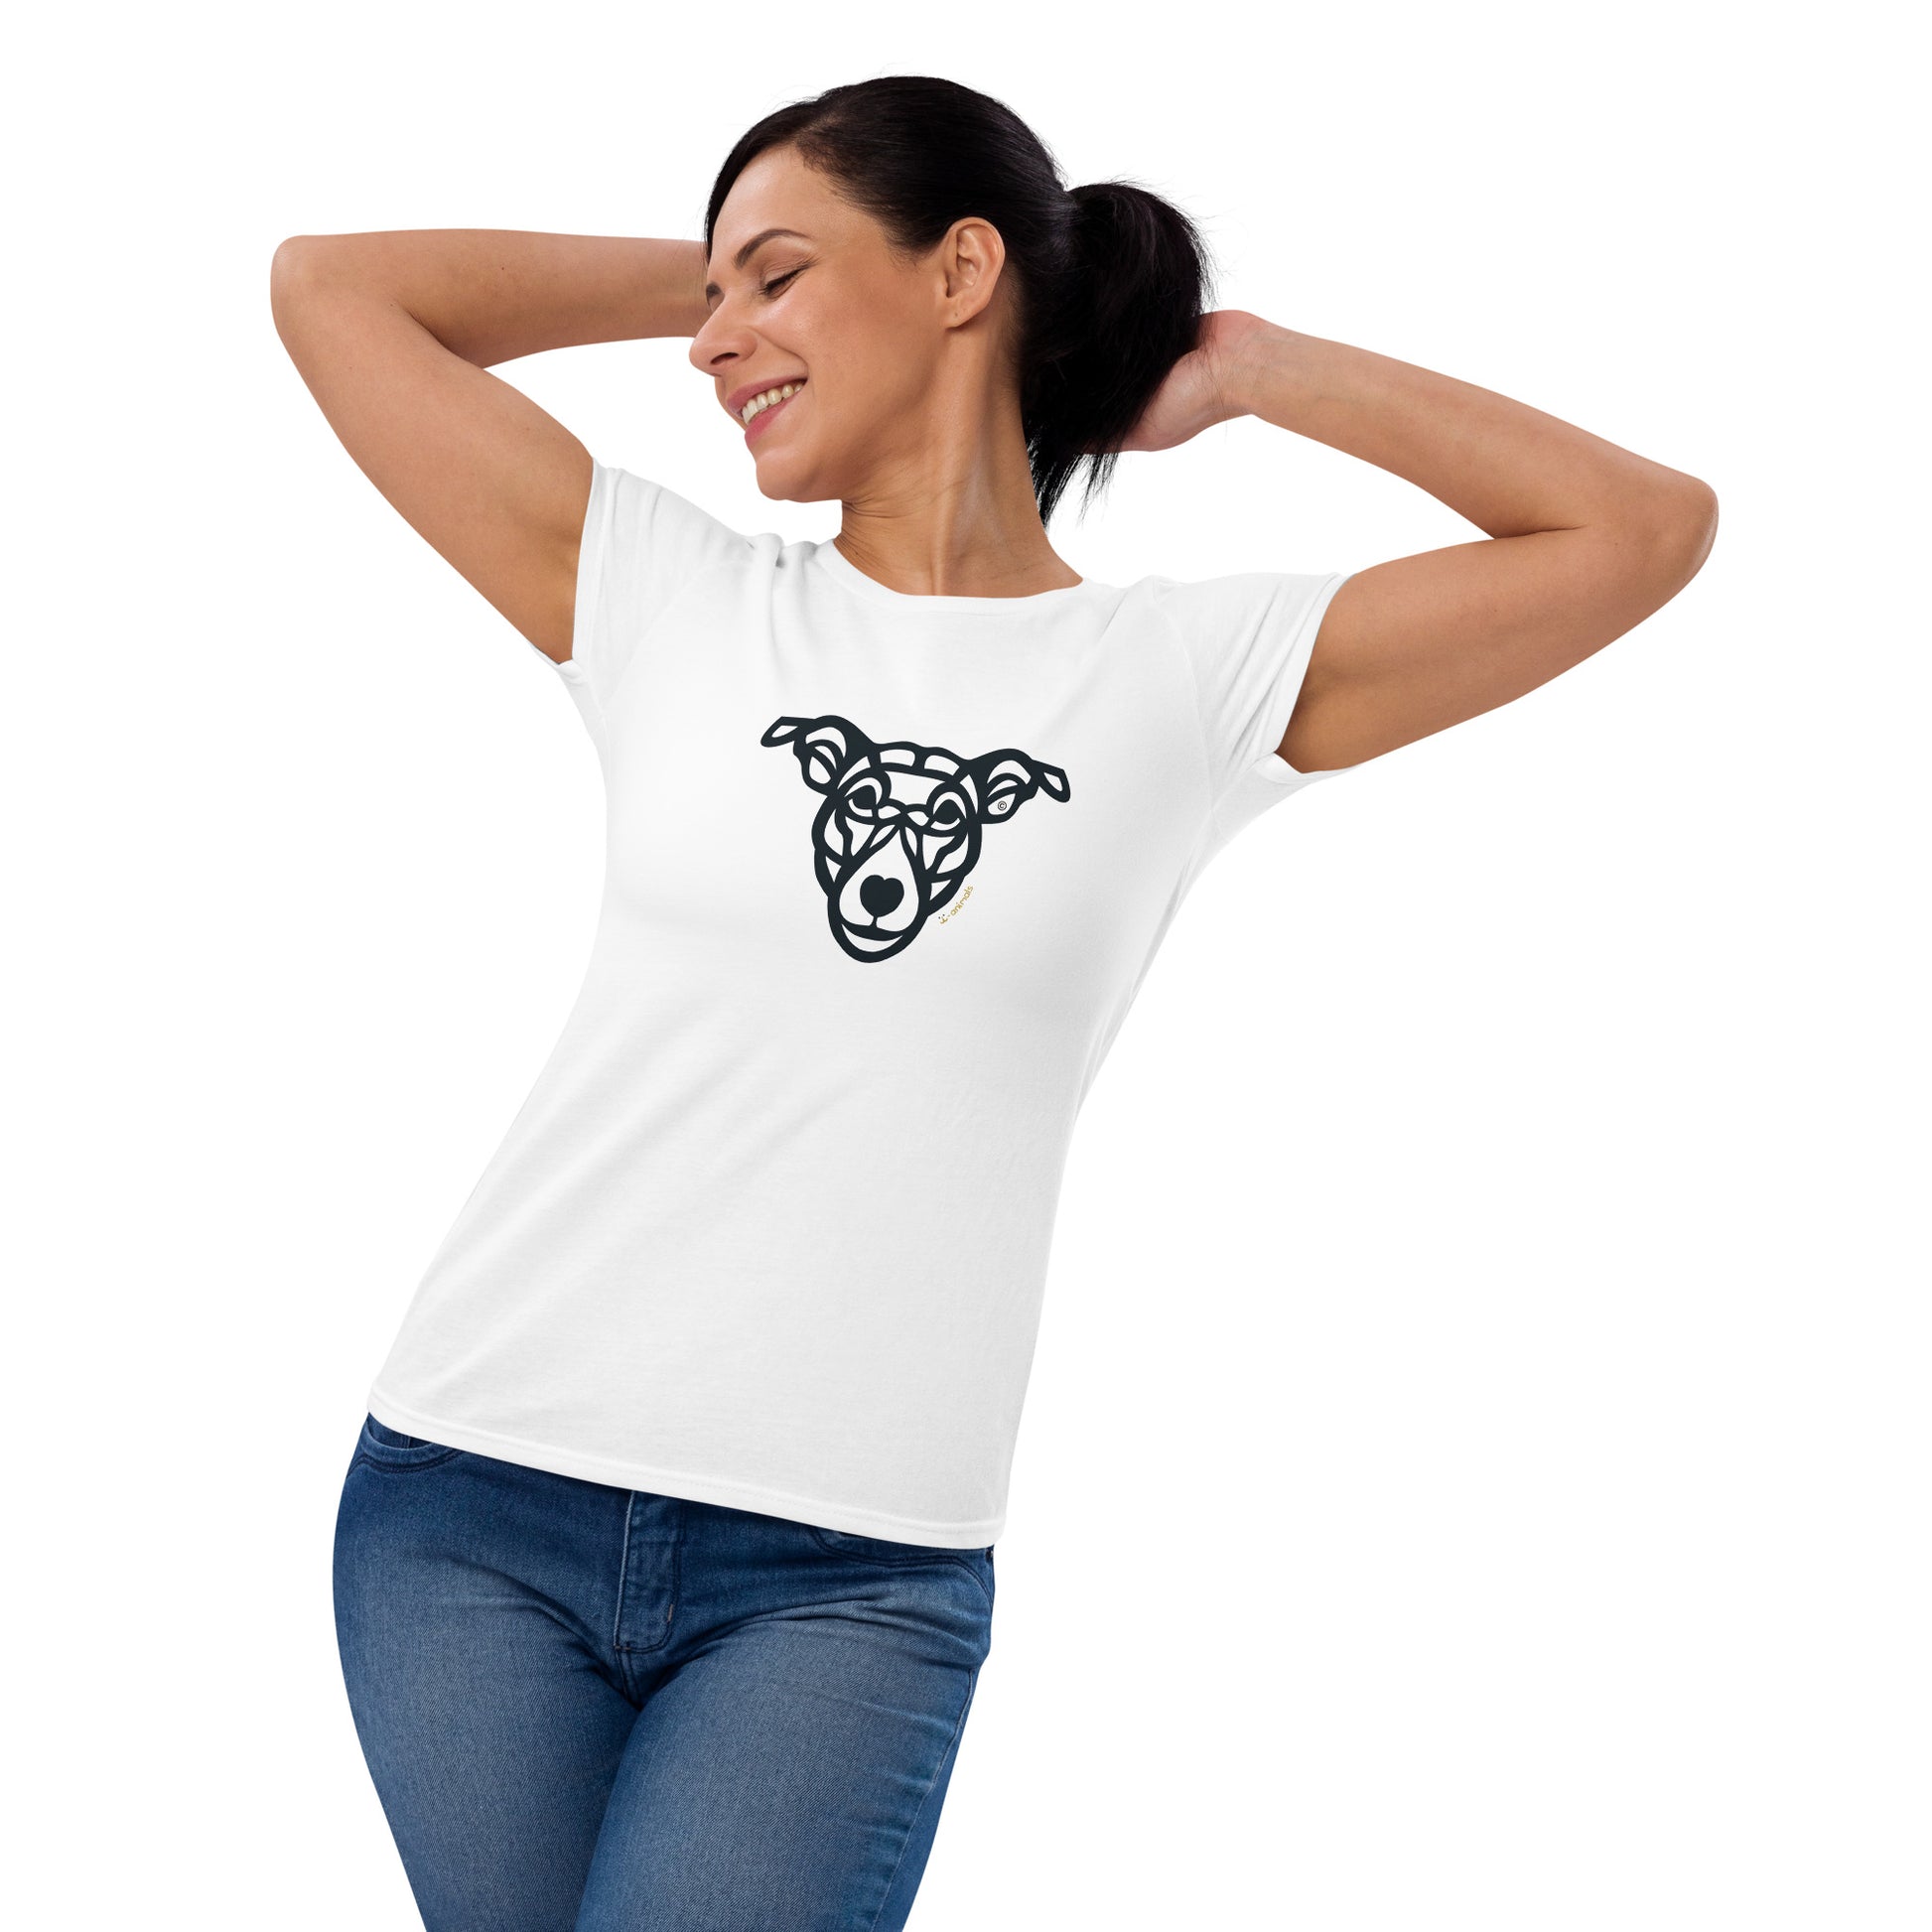 Camiseta feminina de manga curta - “cão Vira-lata” - Tribal - Cores Claras - i-animals